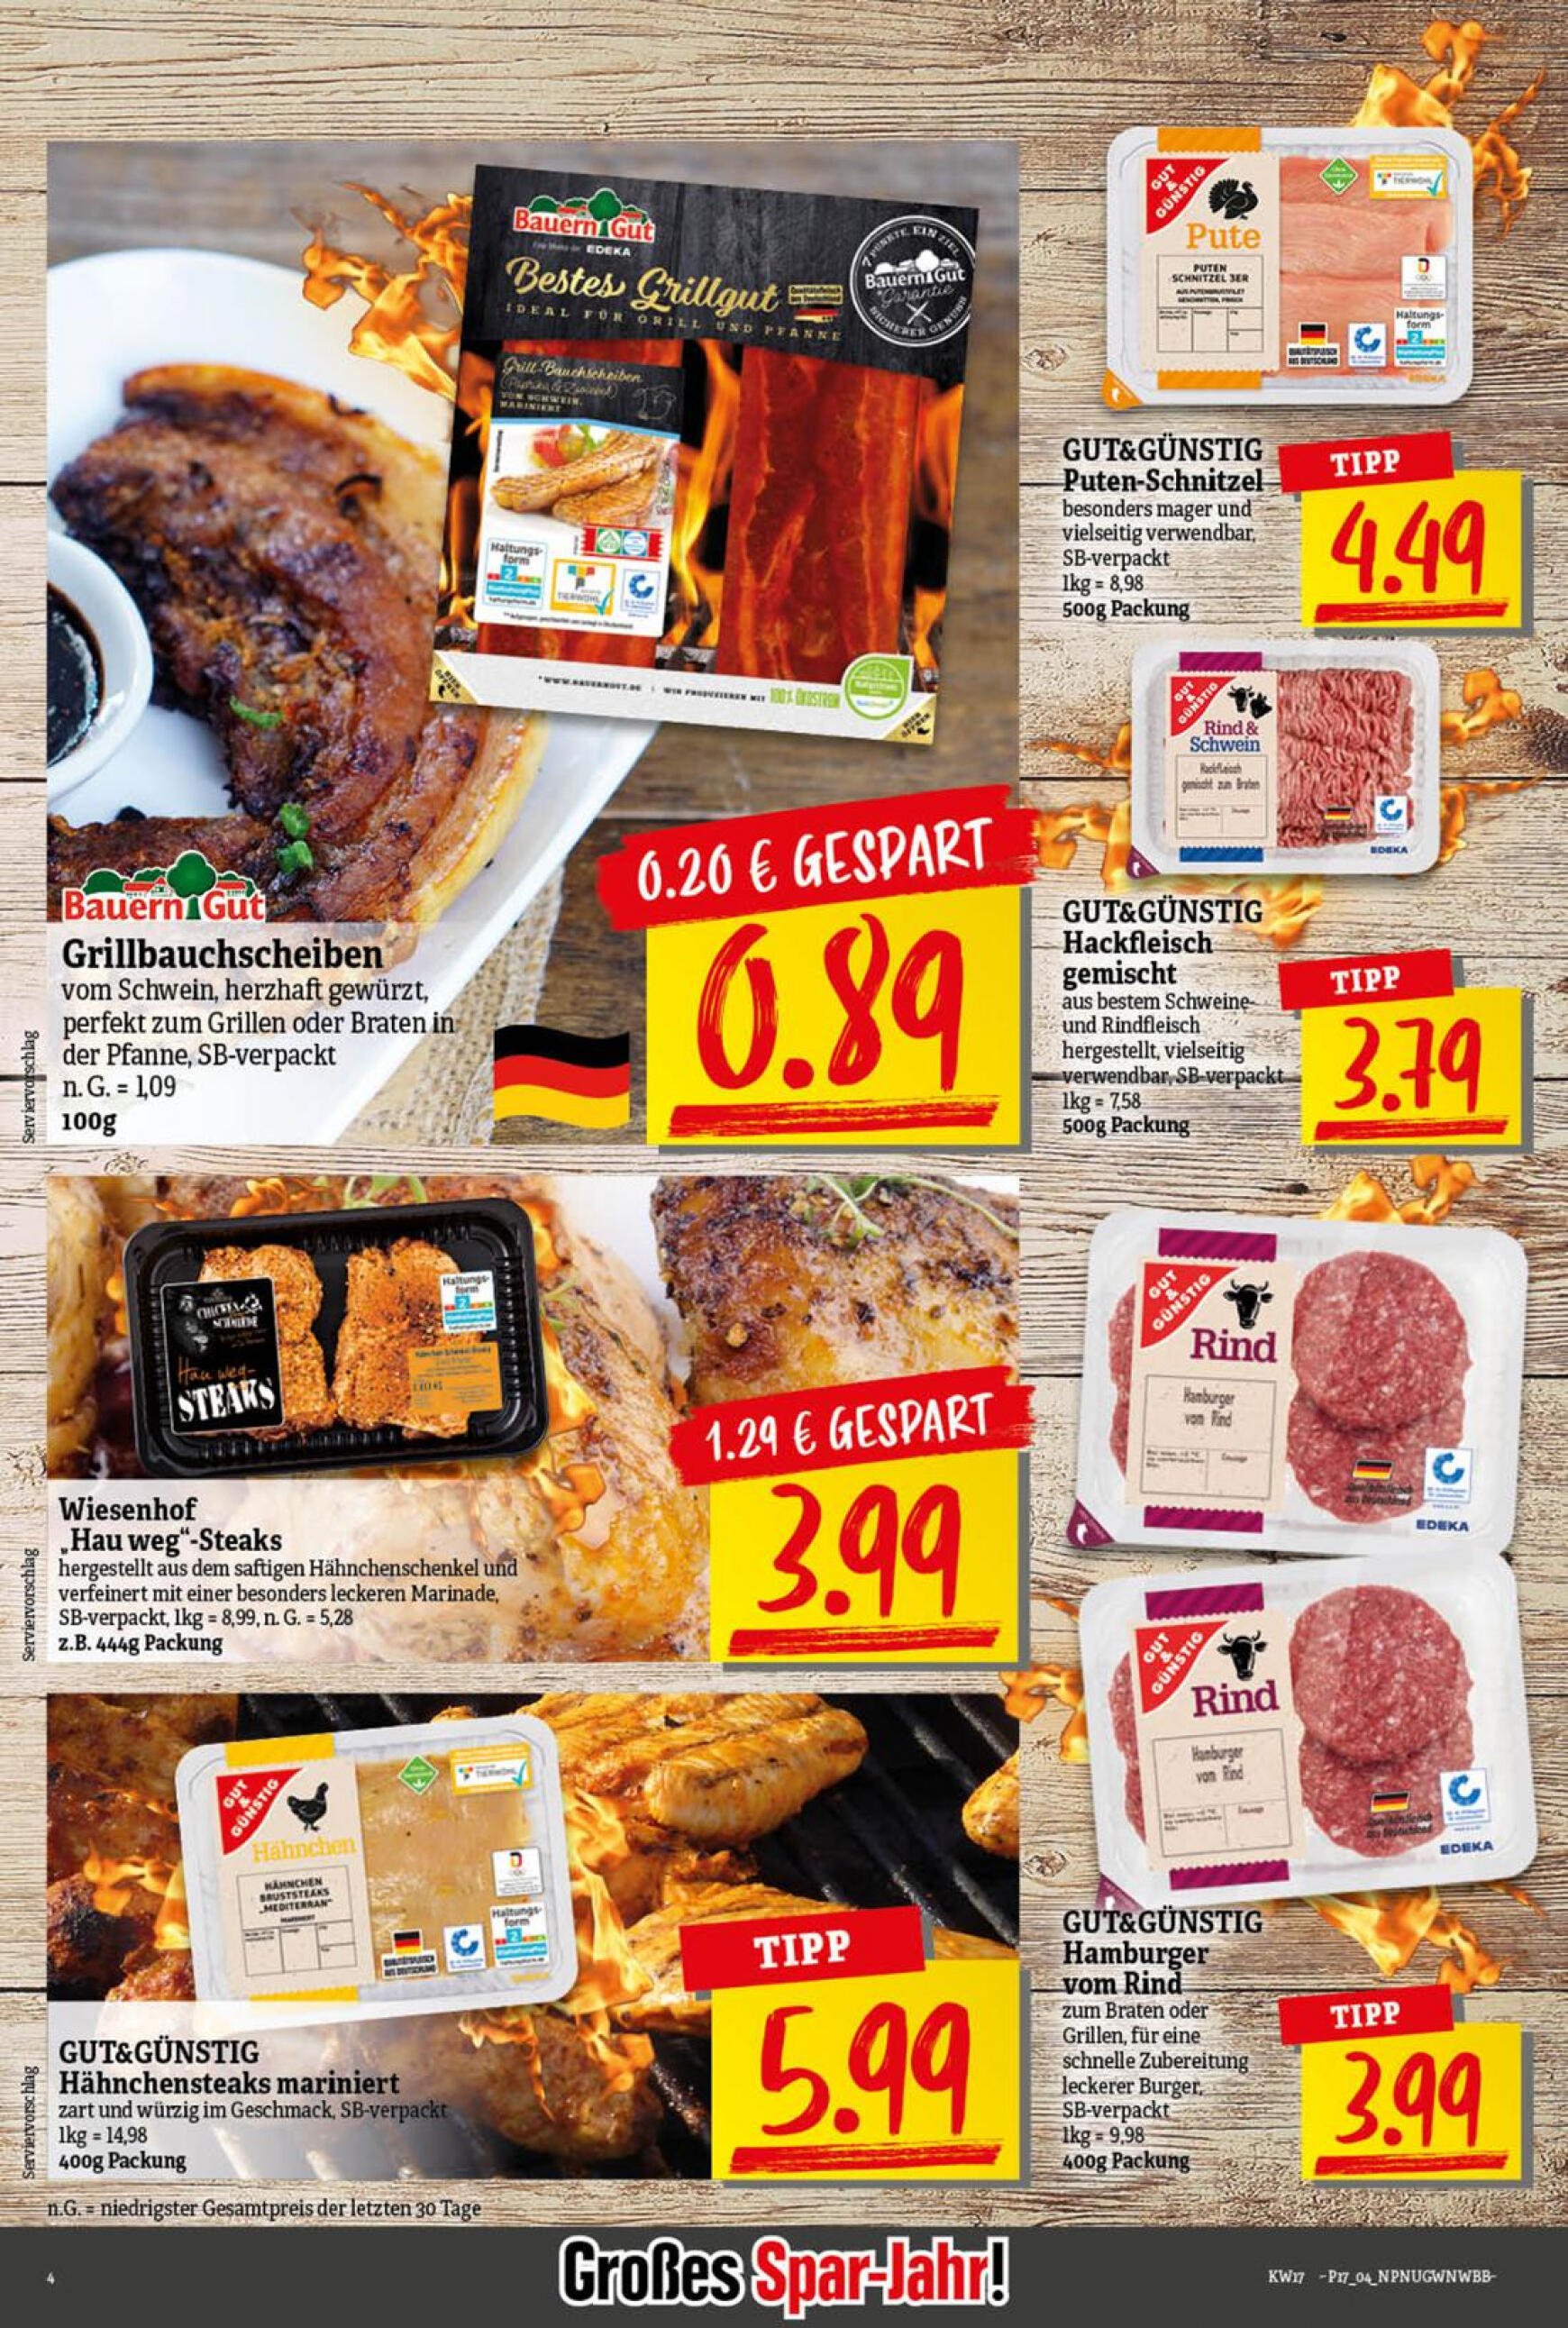 np - Flyer NP - Edeka aktuell 22.04. - 27.04. - page: 4